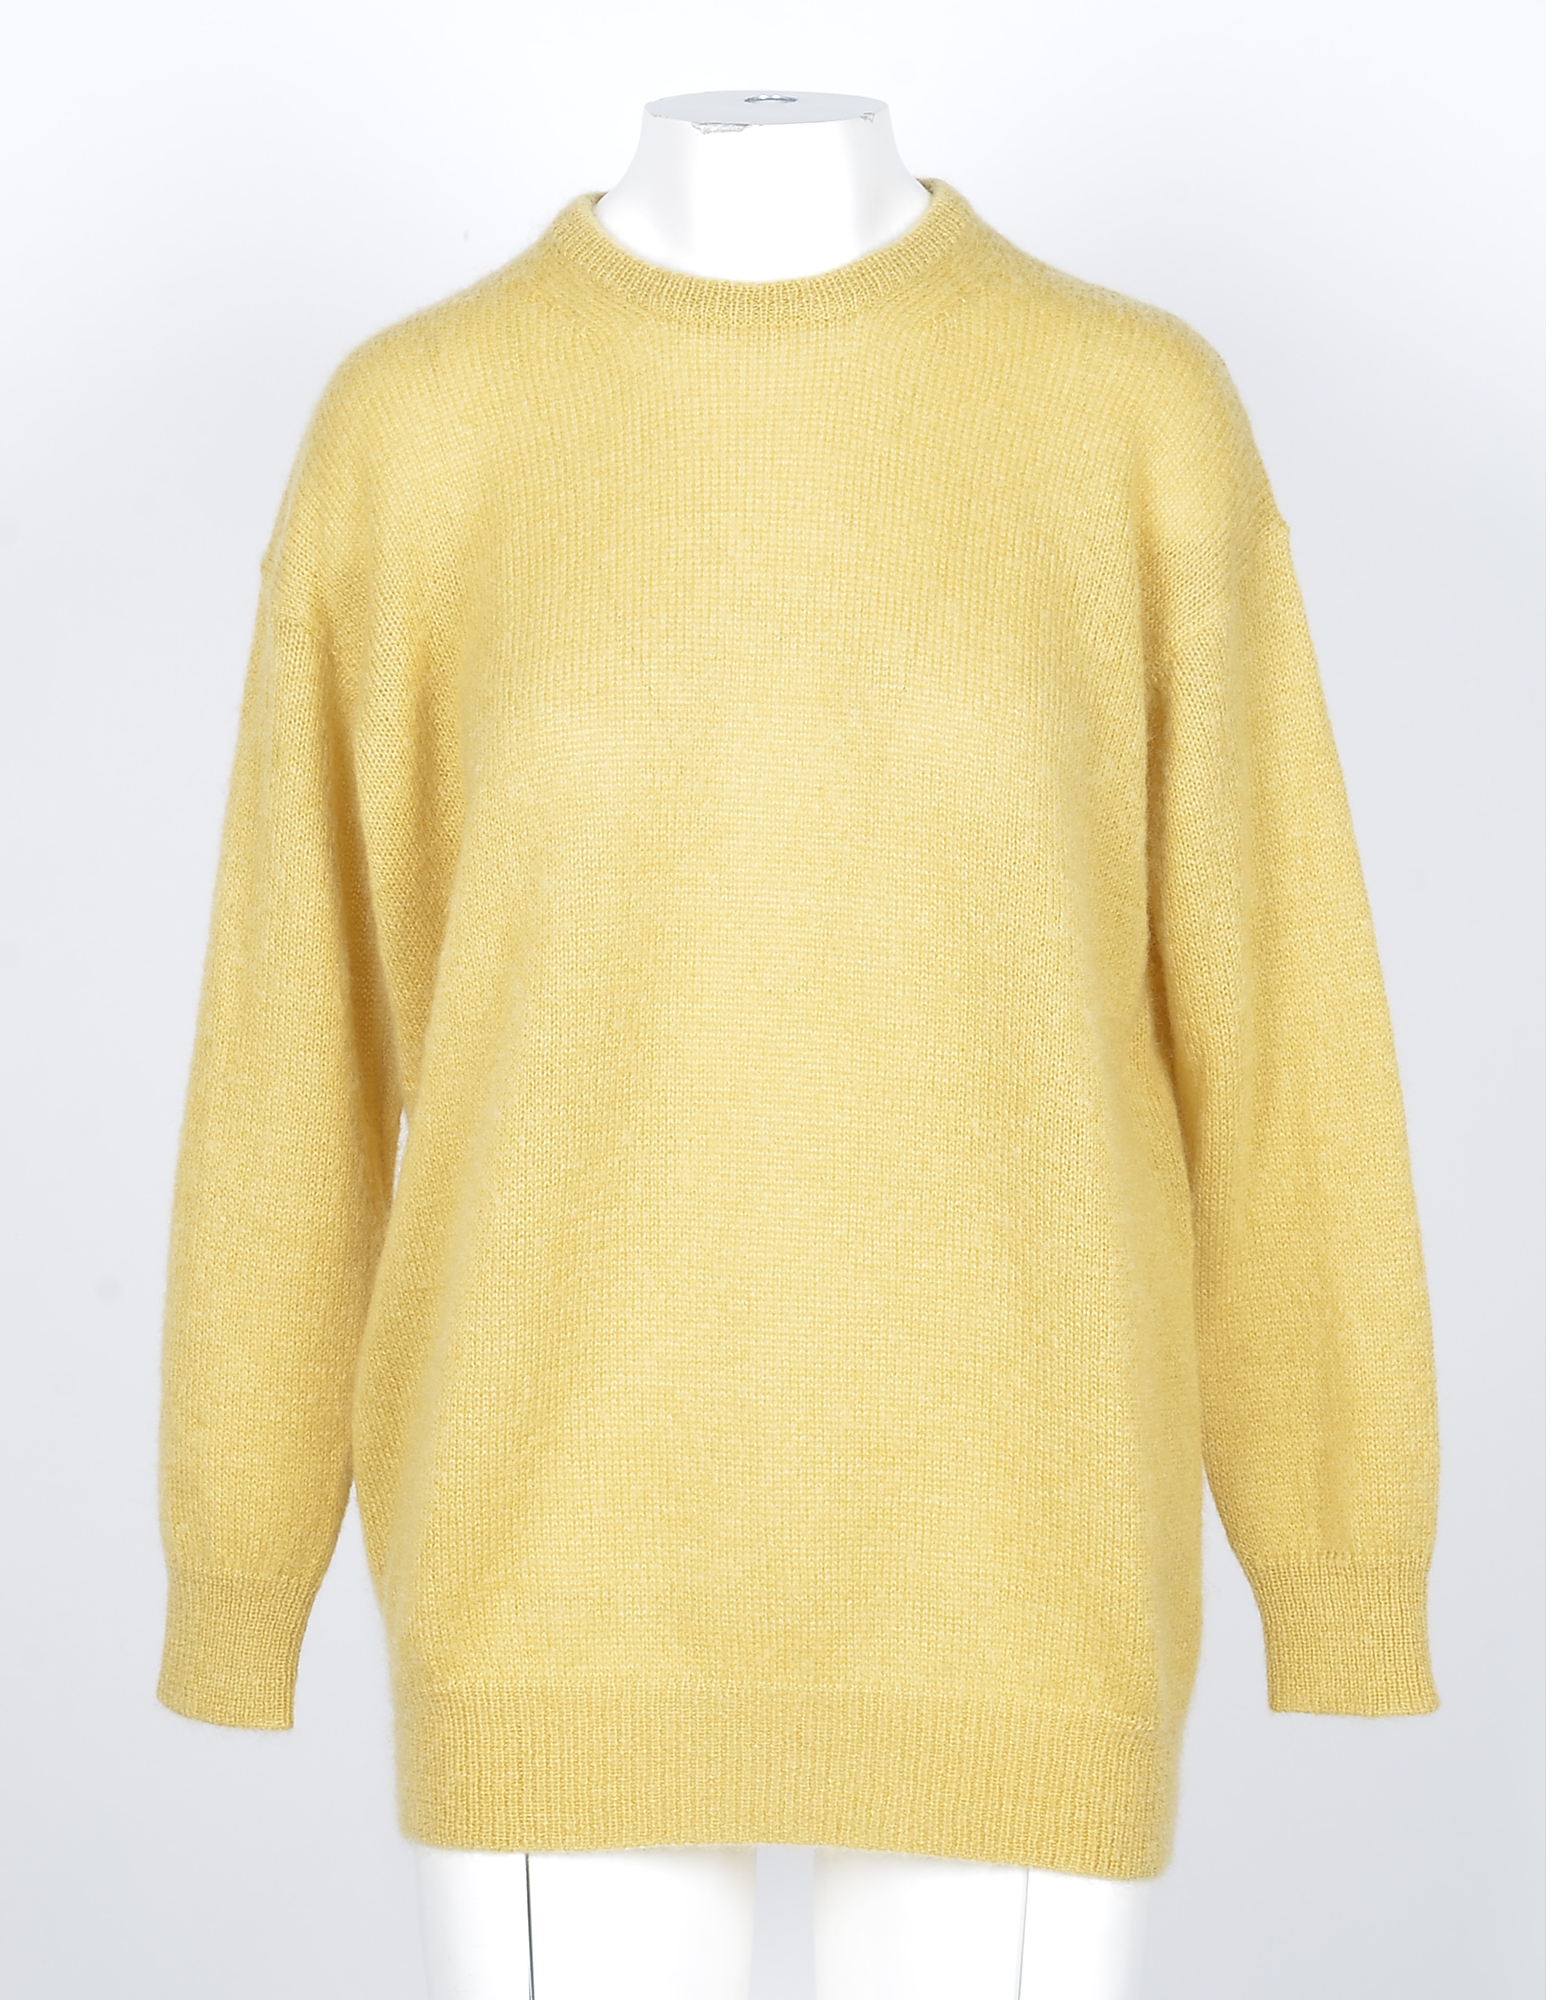 Max Mara Designer Knitwear, Mustard Yellow Mohair and Wool Women's Sweater